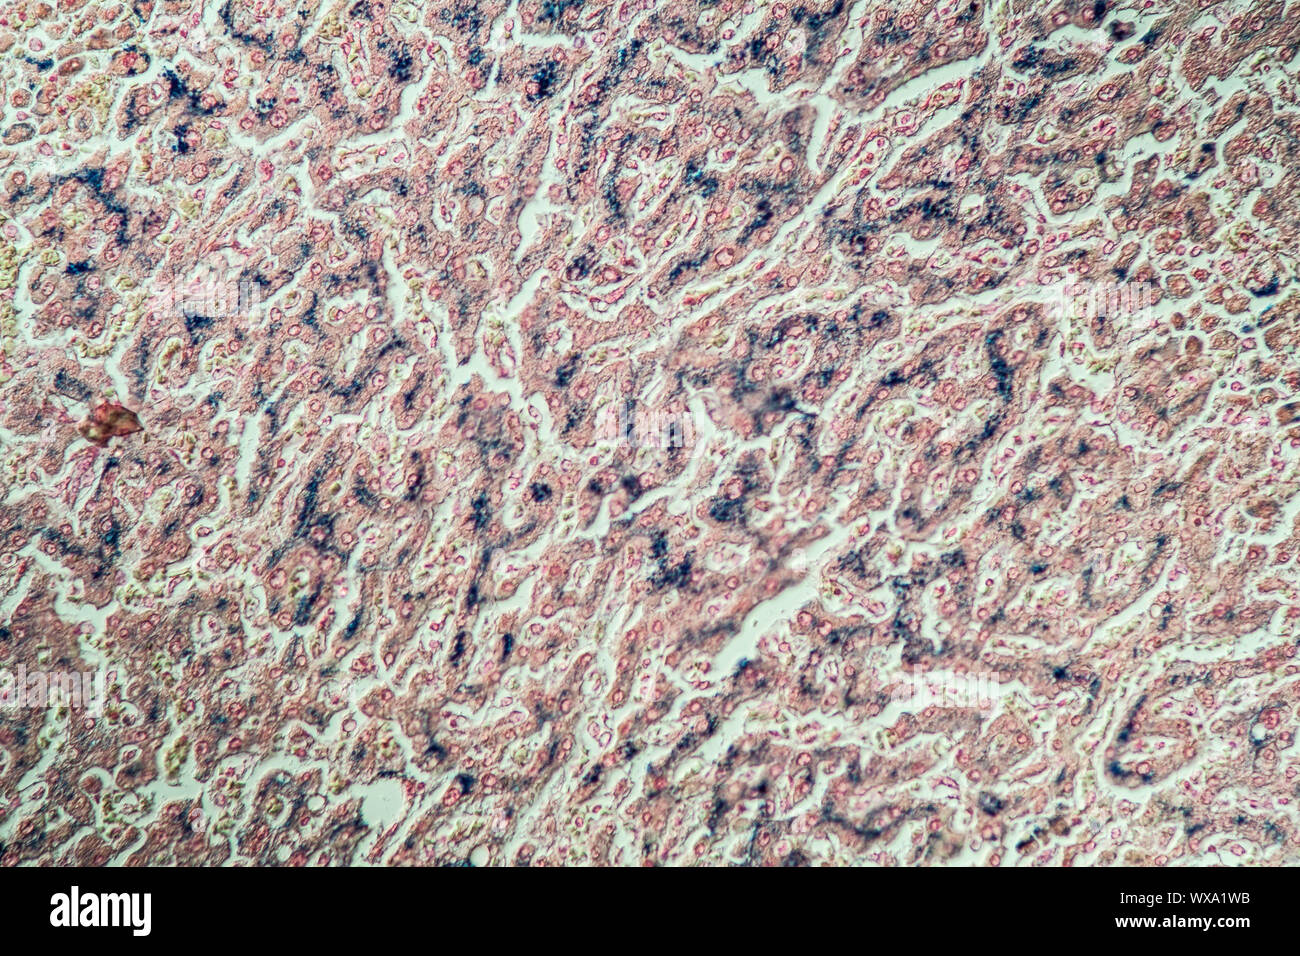 Hemosiderosis liver under the microscope 100x Stock Photo